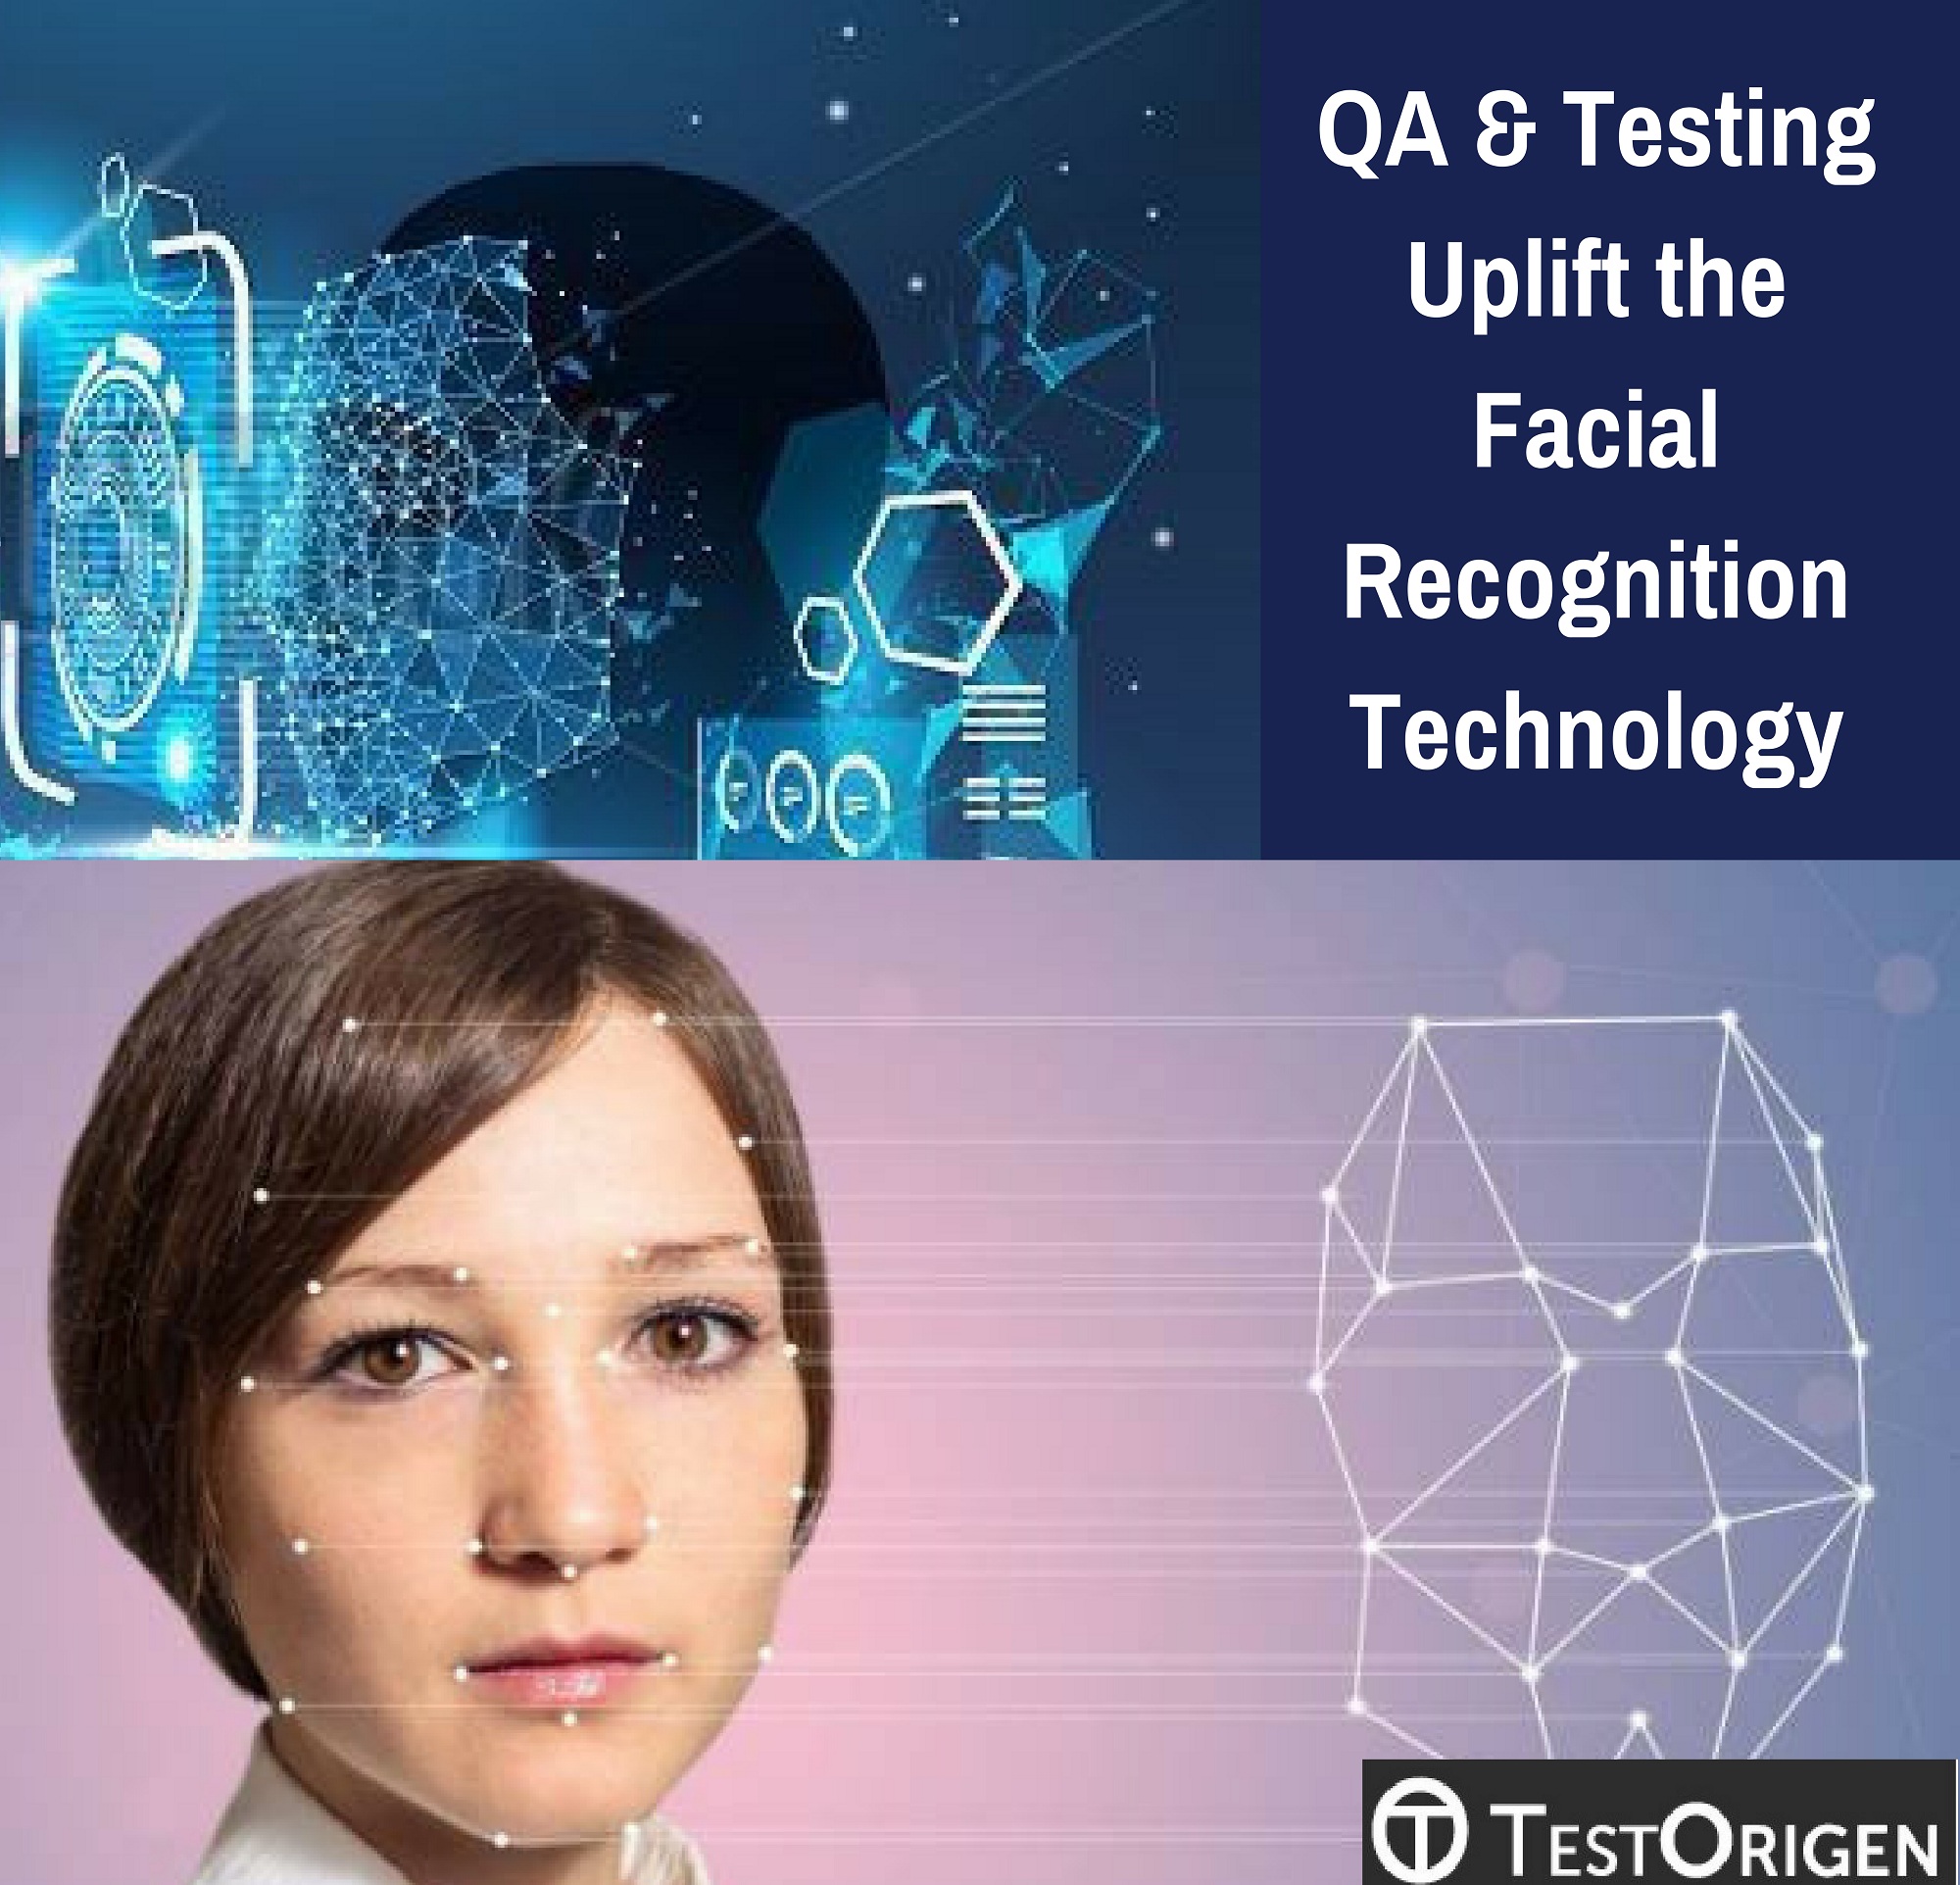 qa-testing-uplift-the-facial-recognition-technology-testorigen